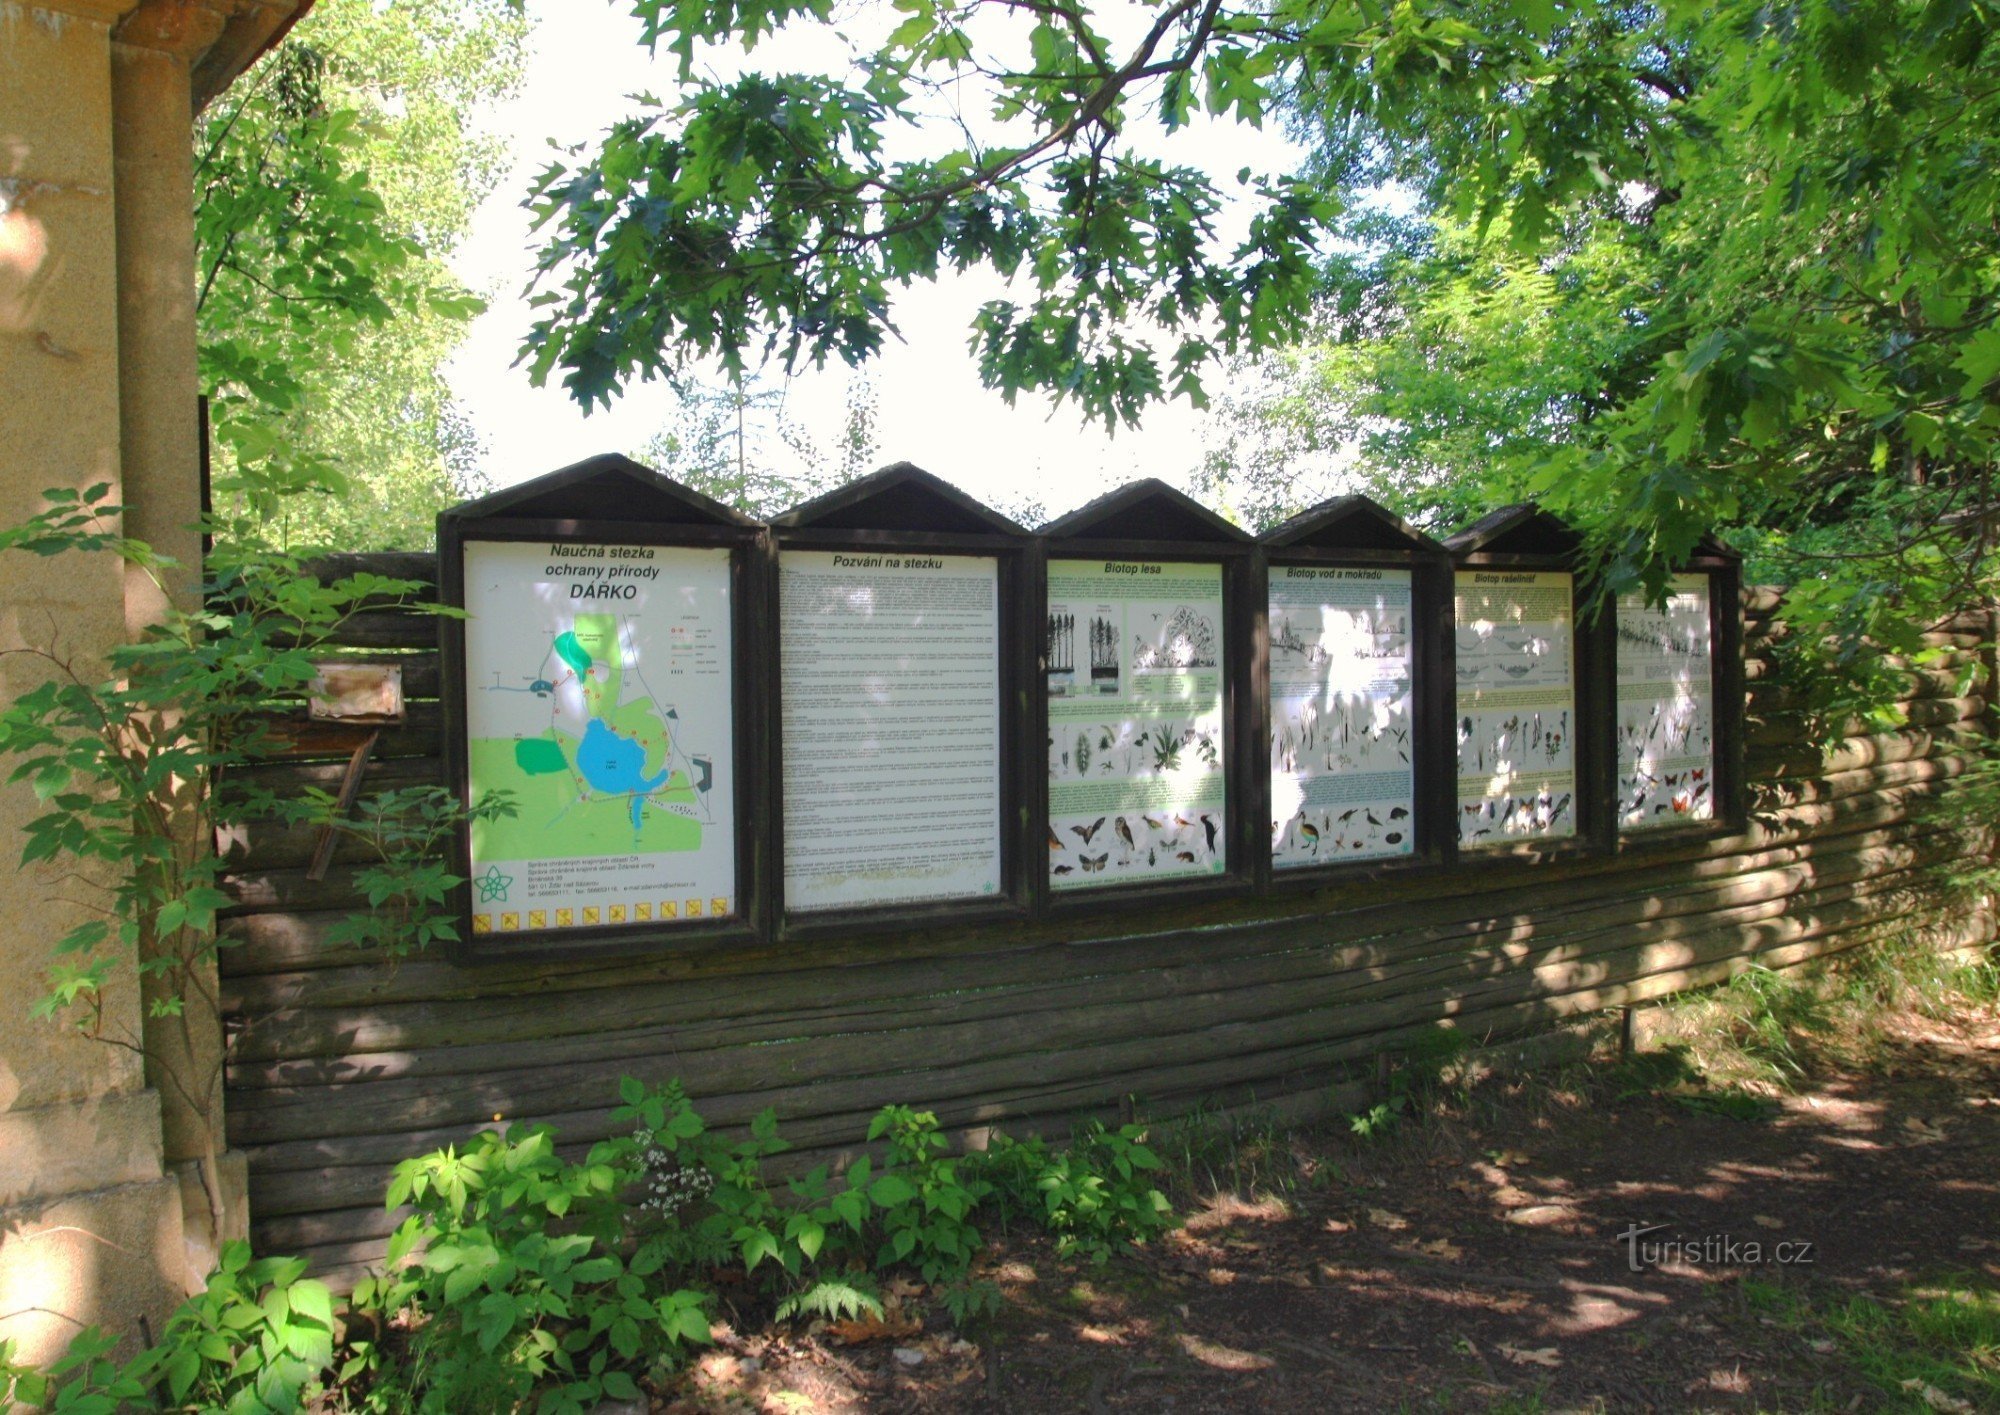 Information board about the Dářko educational trail